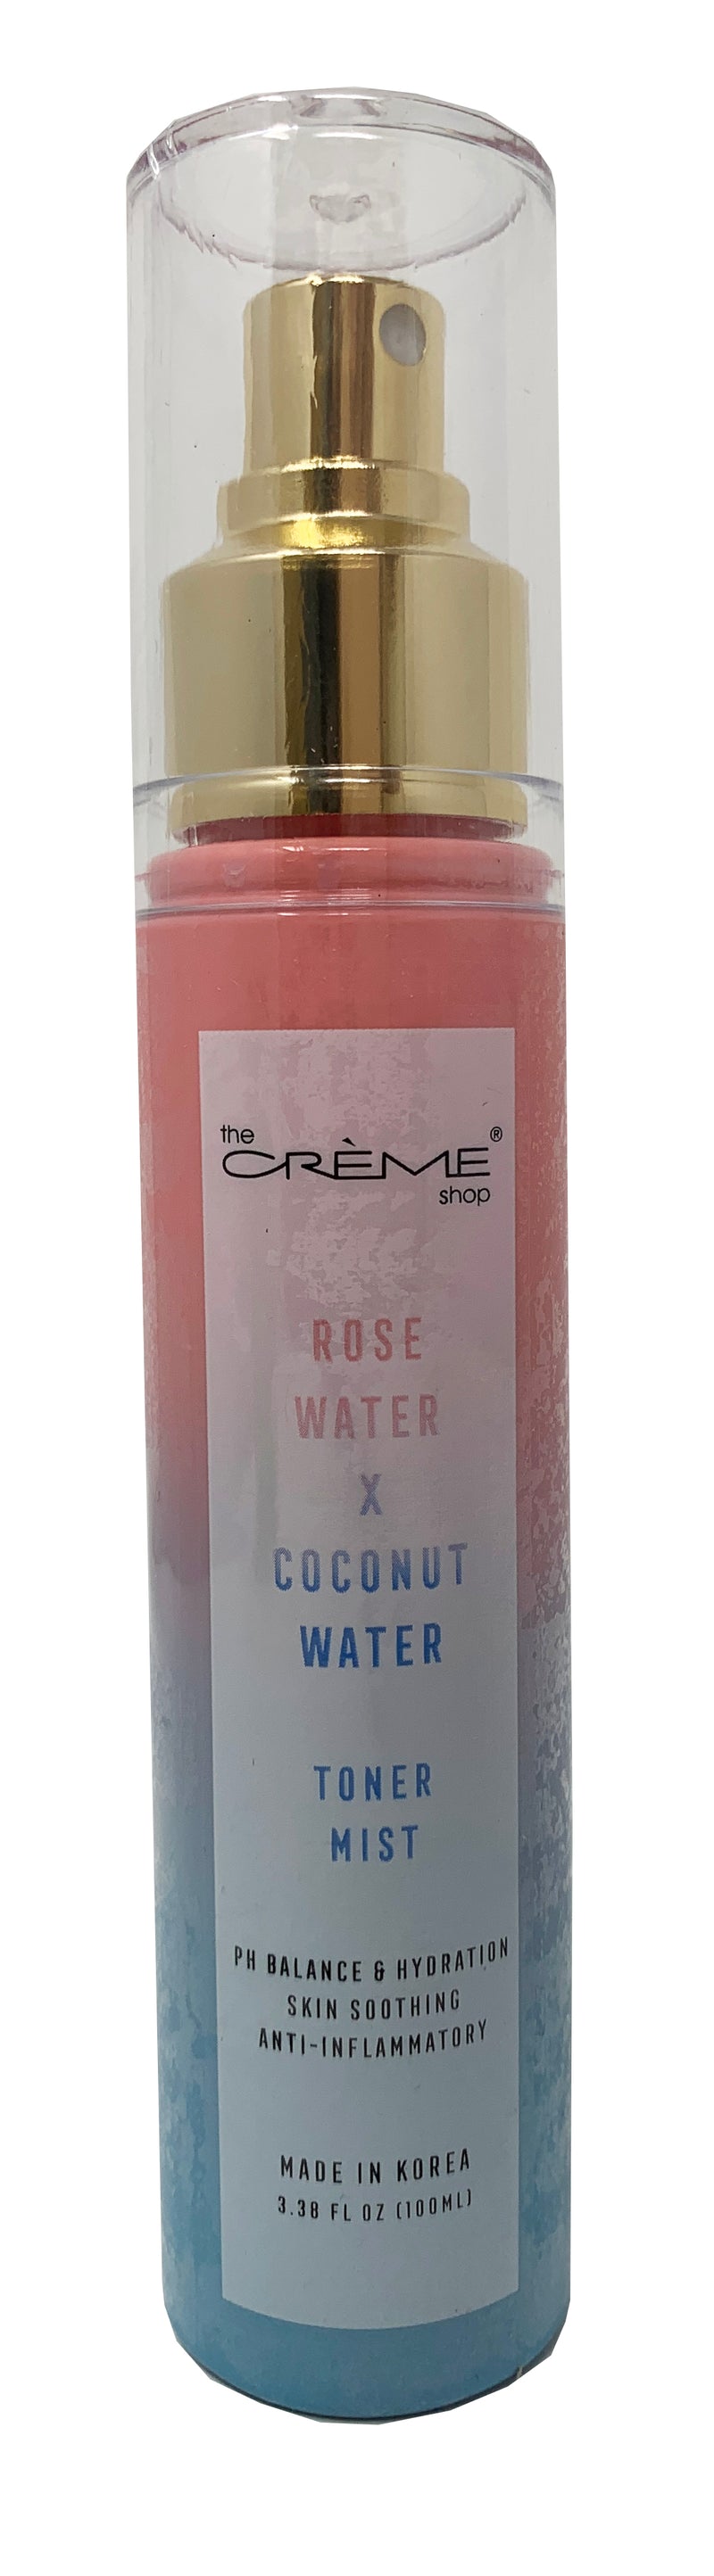 [The Creme Shop] Toner Mist 3.38oz, Rose Water & Coconut Water